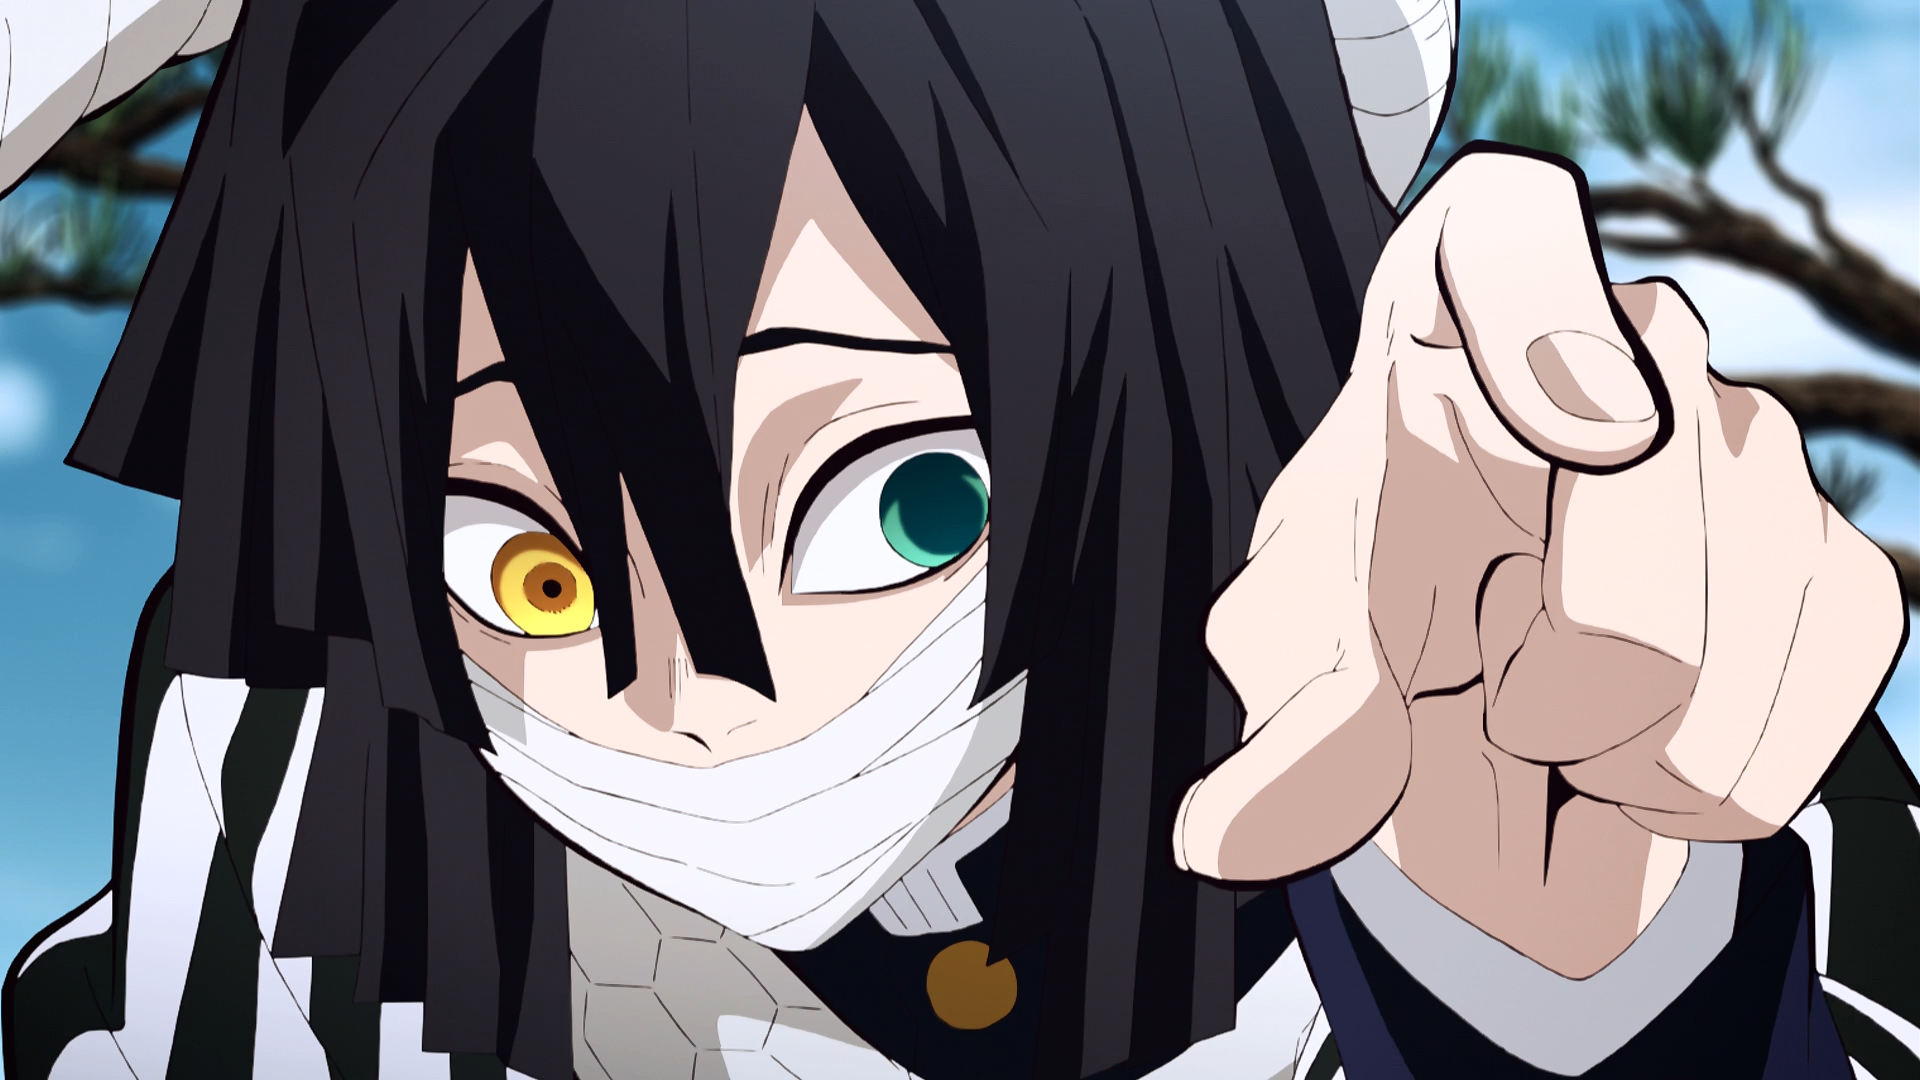 Jual Masker Anime Karakter putih - Masker Mulut di lapak Muthia House |  Bukalapak